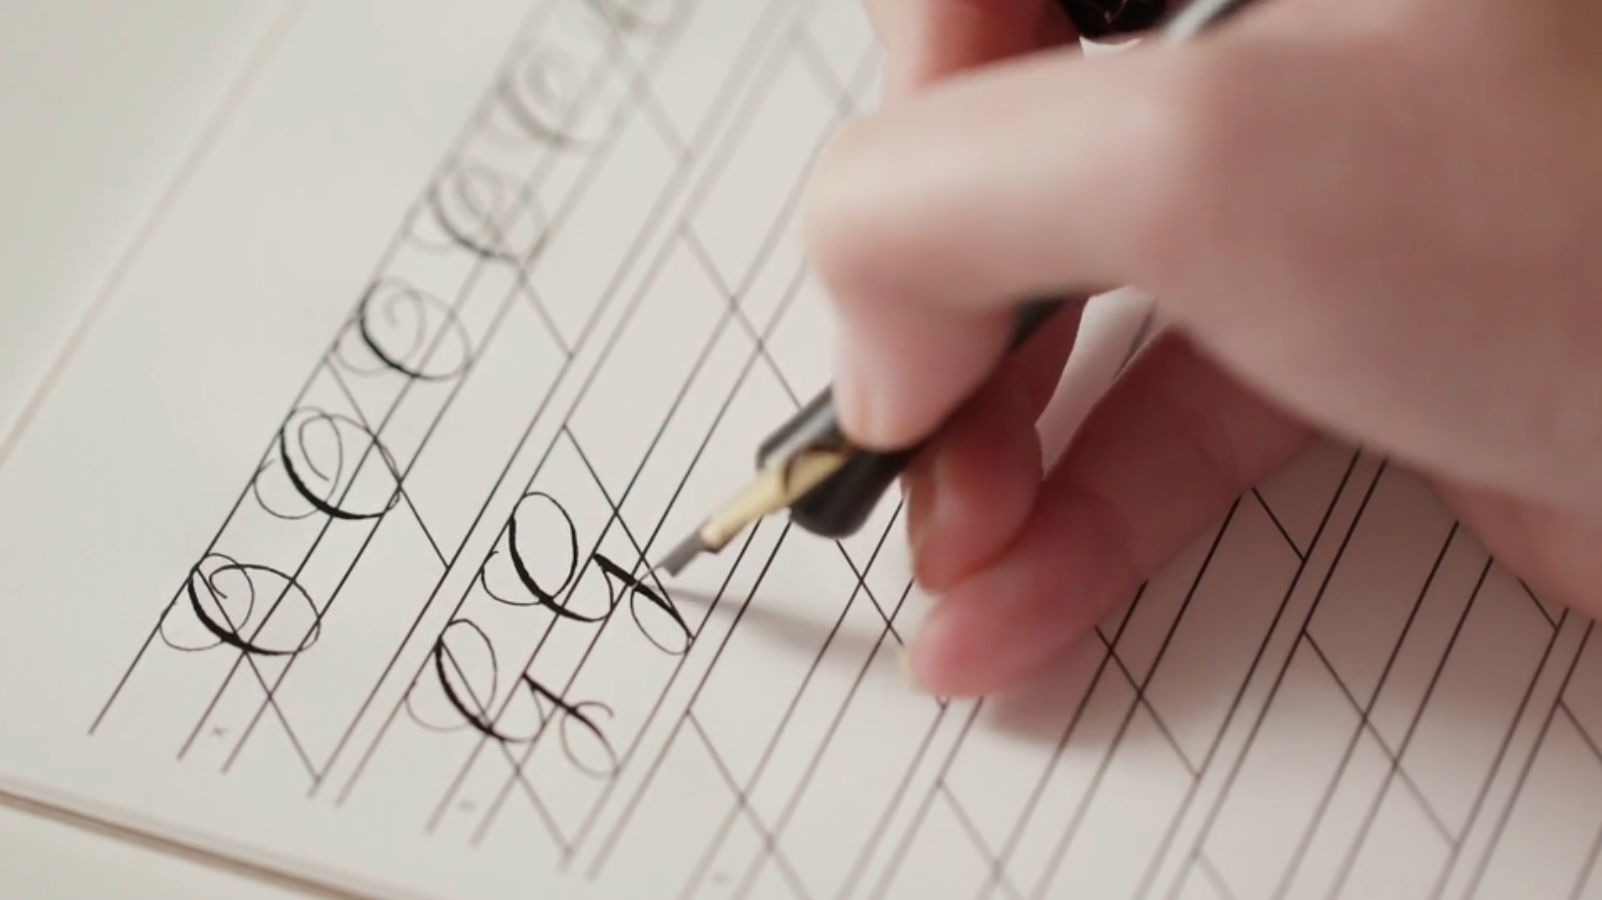 JesSmith Designs Intro to Modern Calligraphy Workbook — JesSmith